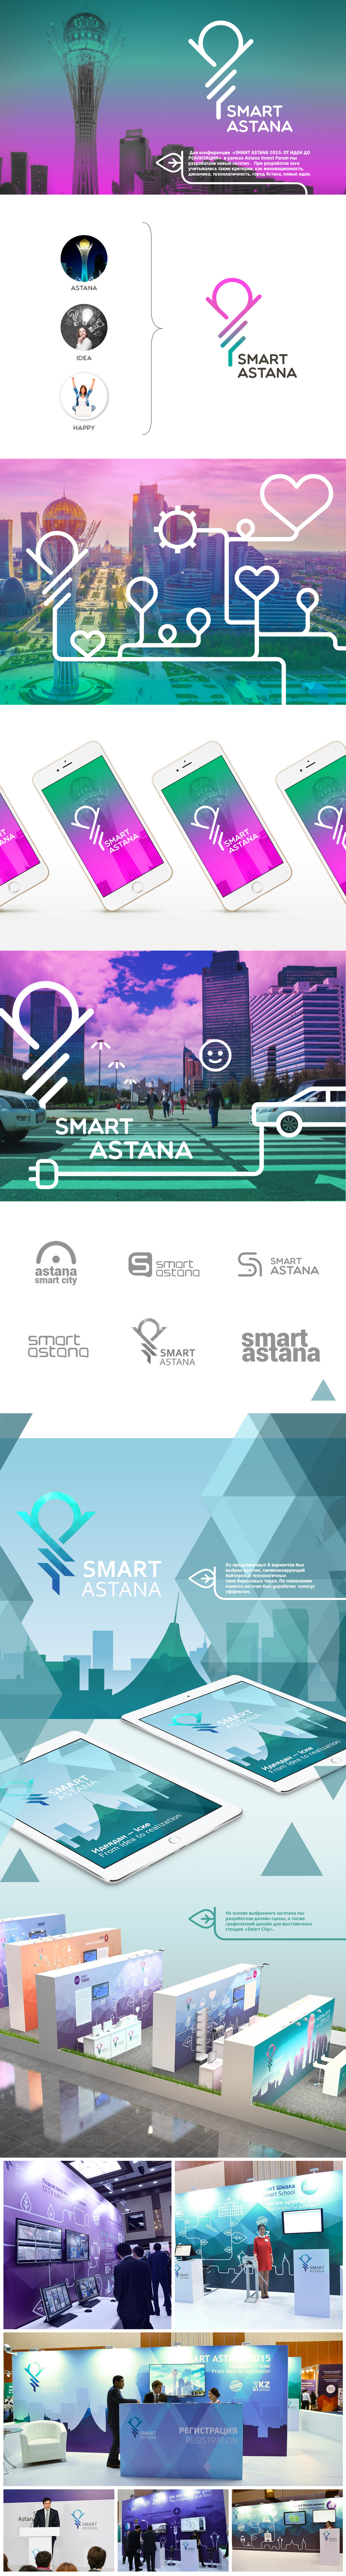 Smart Astana forum smart city